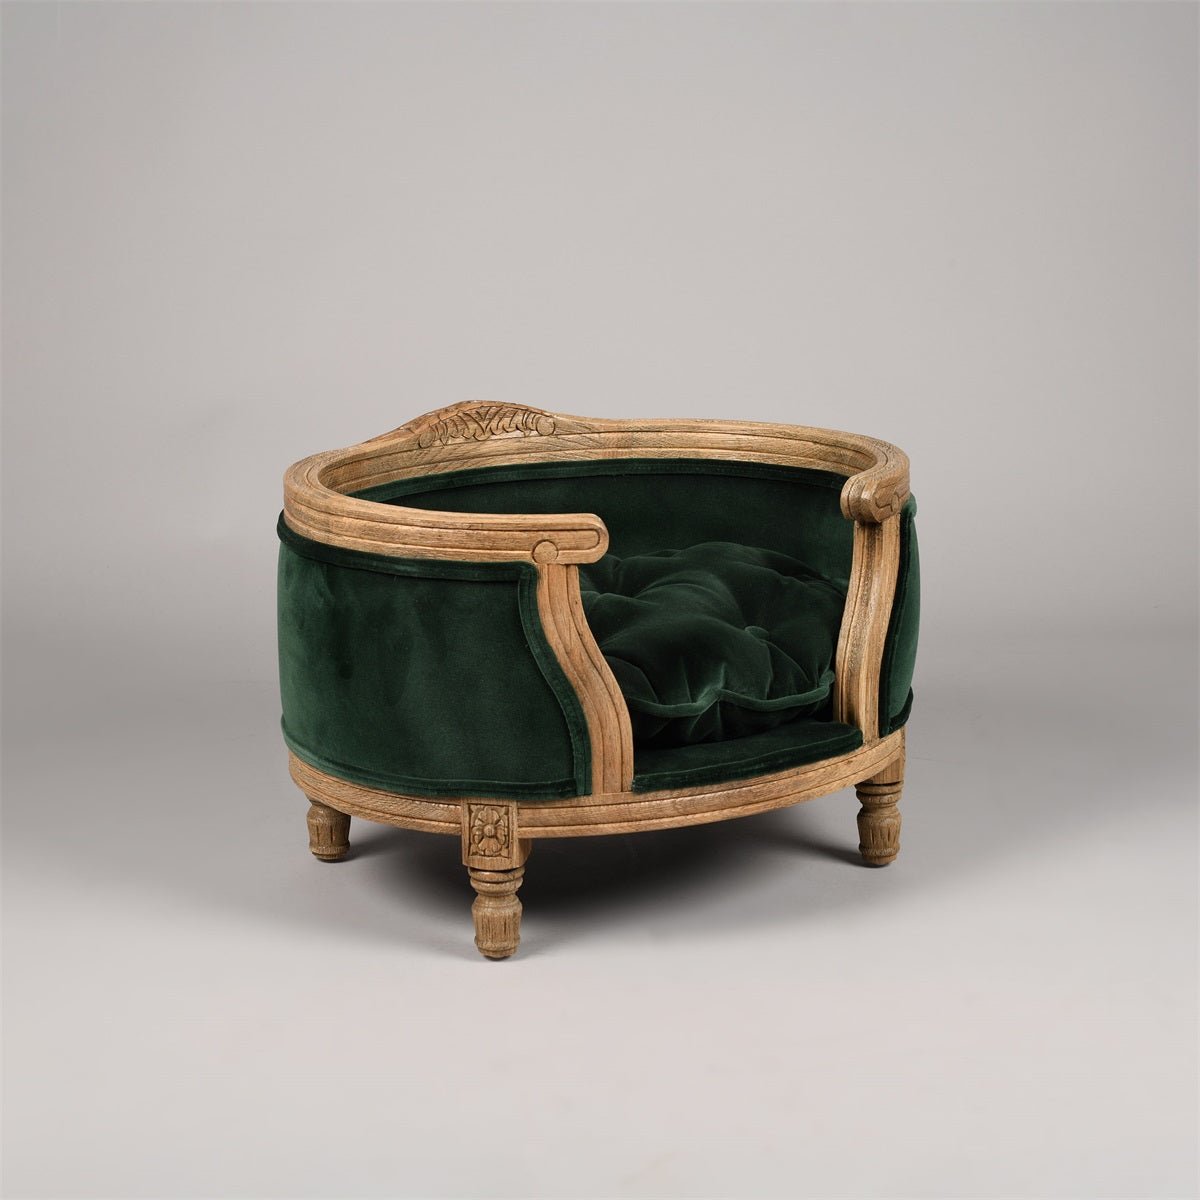 PGELO01401S - George design sänky - Samettinen smaragdinvihreä - S (49 x 40 x 31cm) - Muotitassu